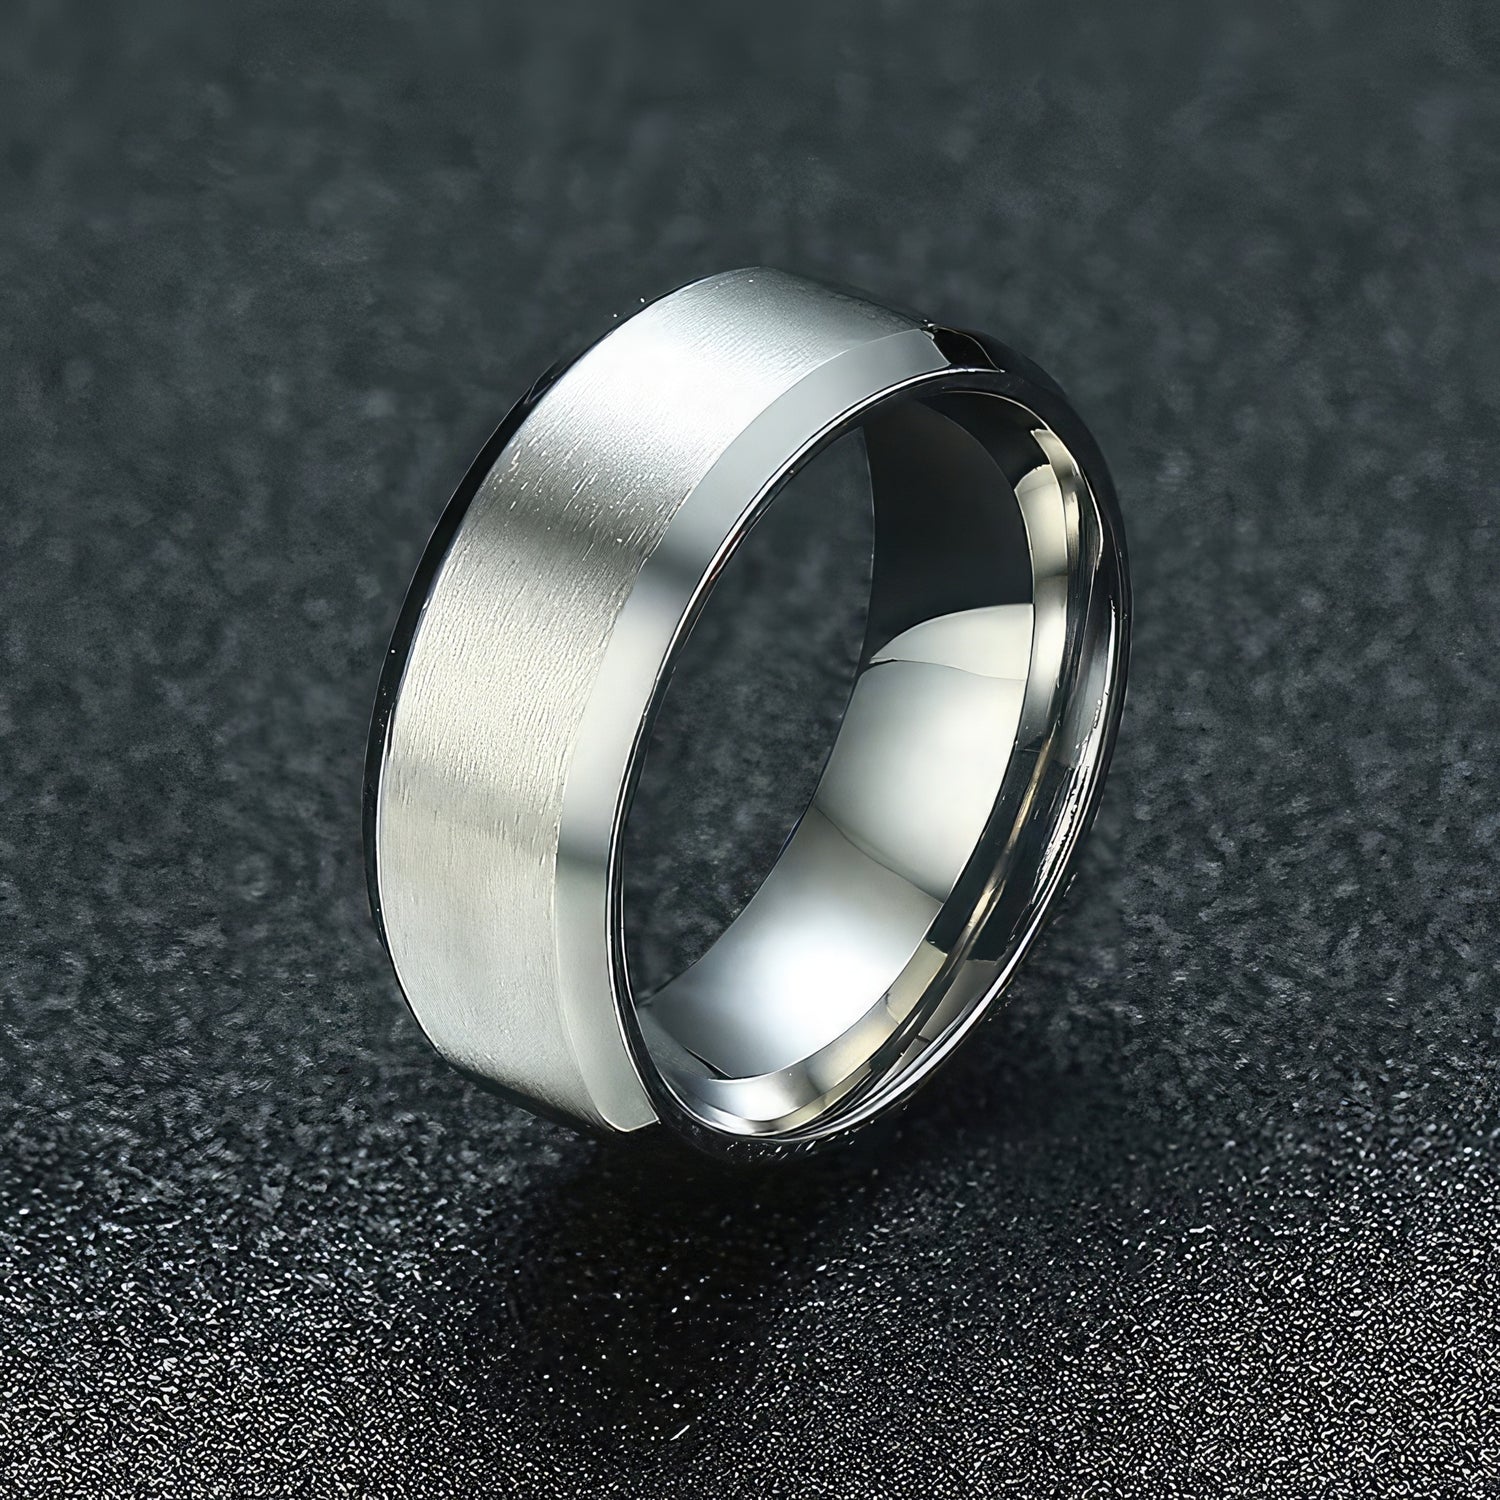 Brushed Stainless Steel Wedding Rings